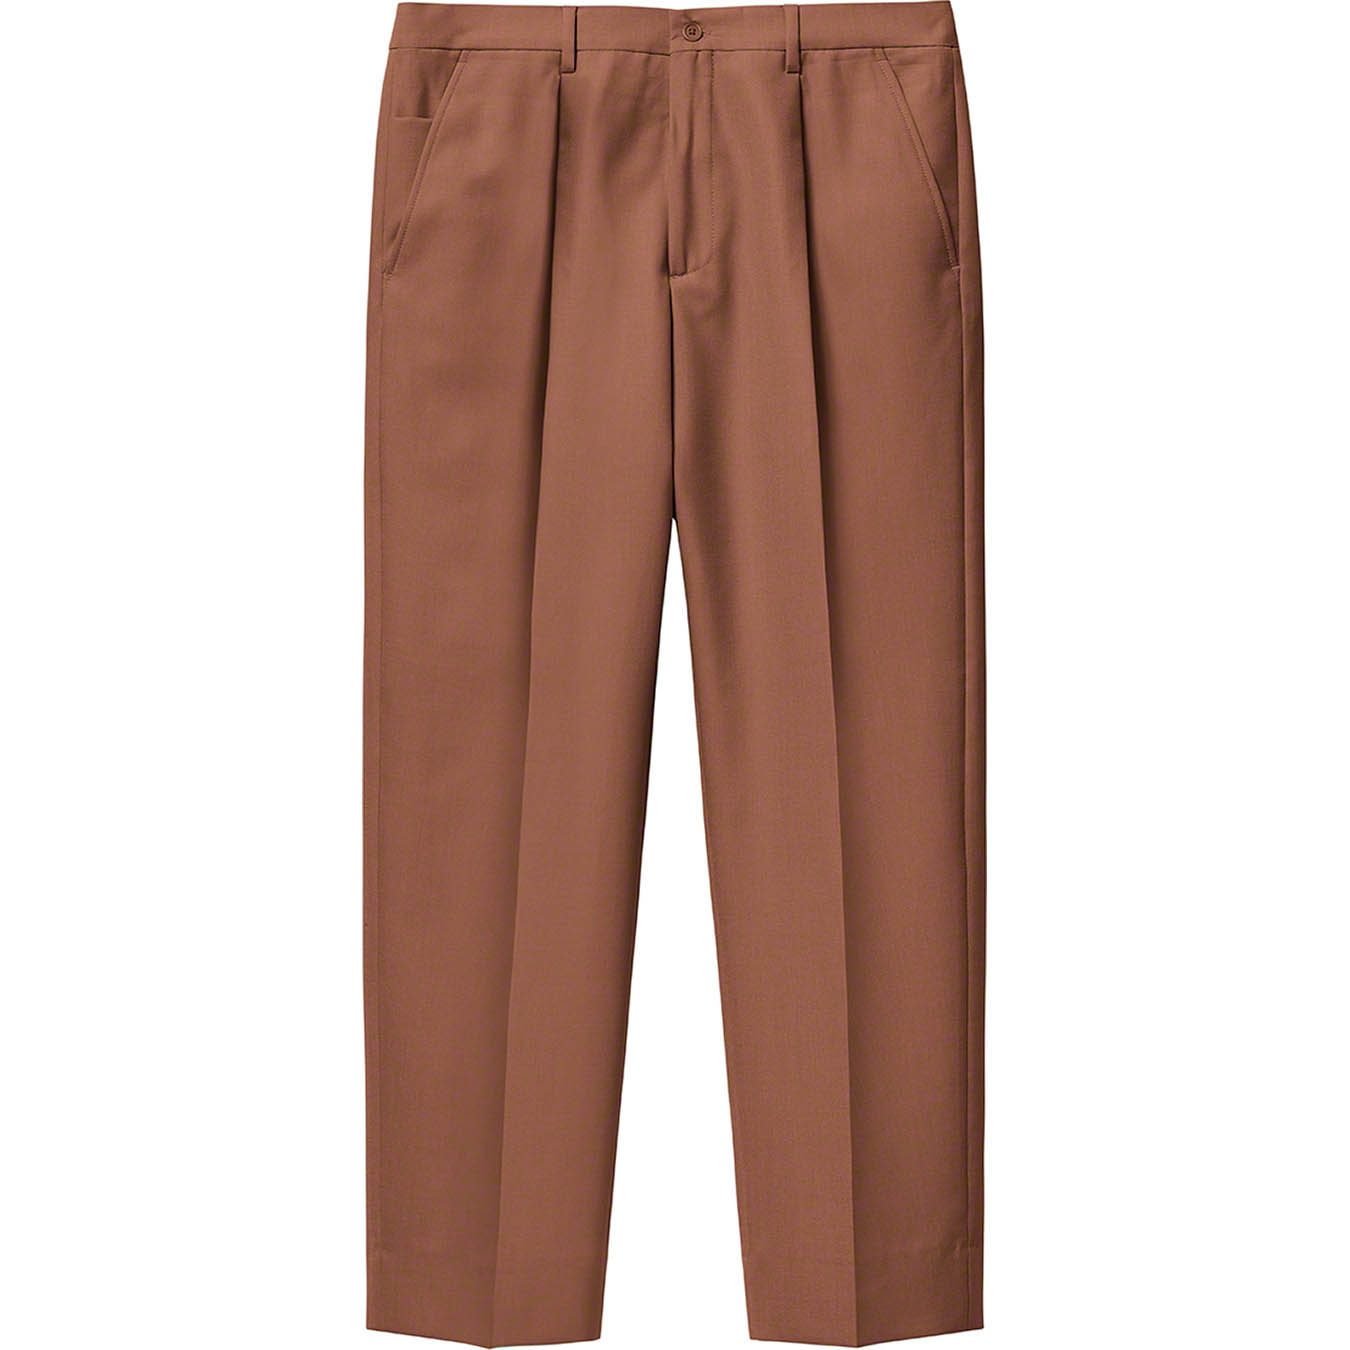 SUPREME pleated trousers mint 30サイズ